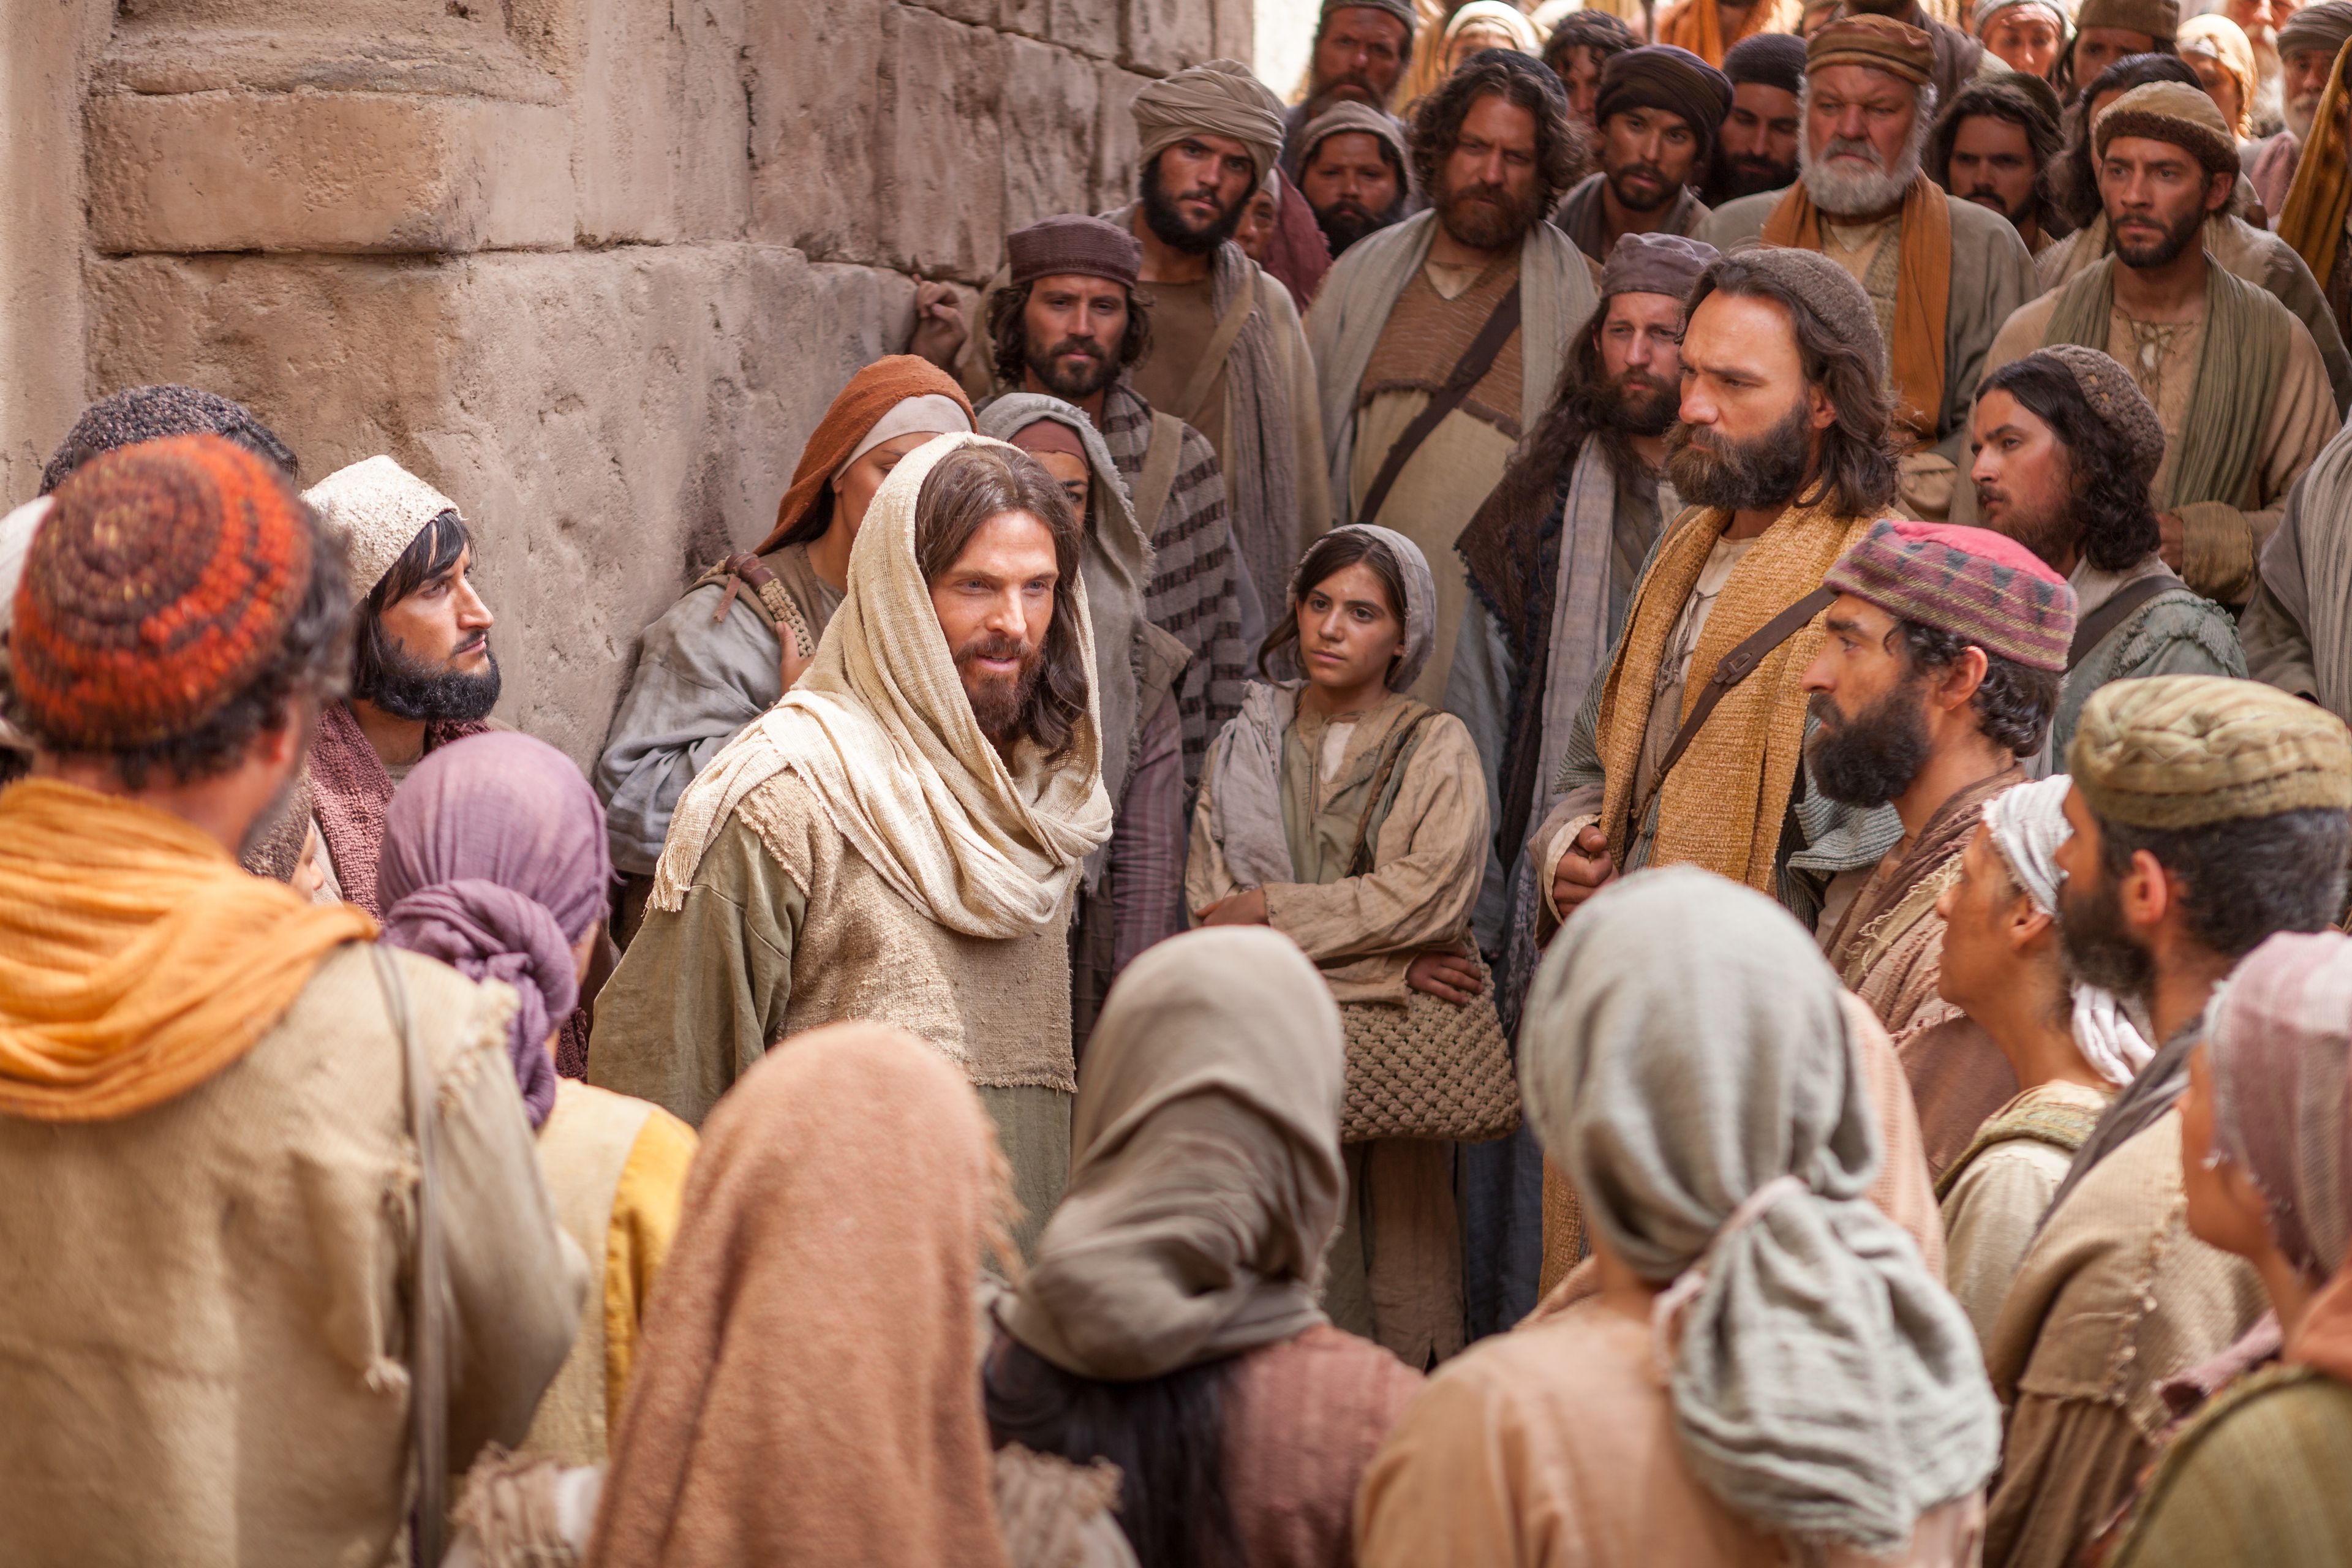 Christ teaches His gospel as disciples follow Him.